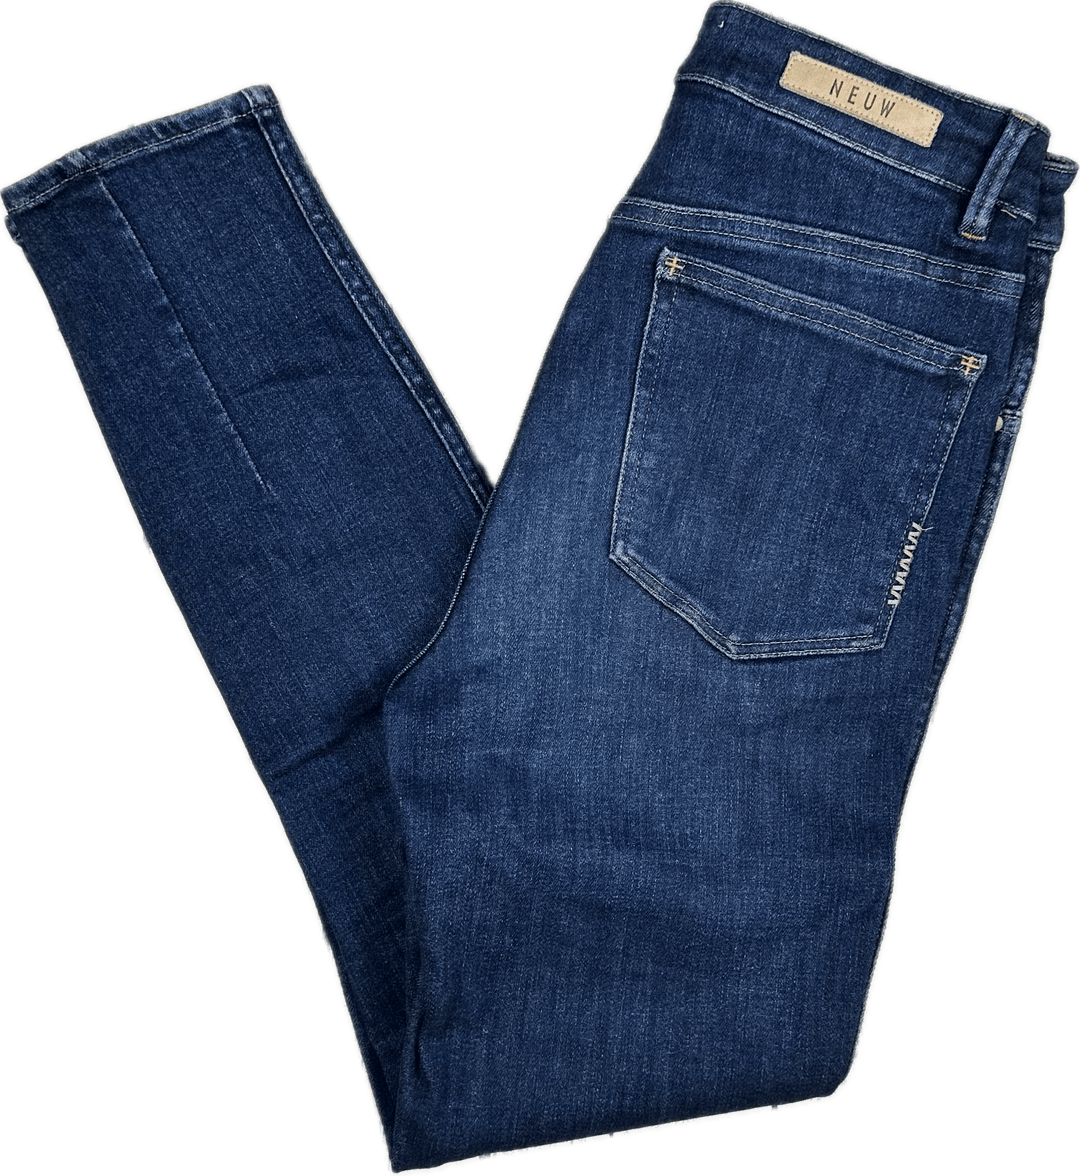 NEUW 'Marilyn' High Skinny Stretch Jeans - Size 27 or 9 AU - Jean Pool